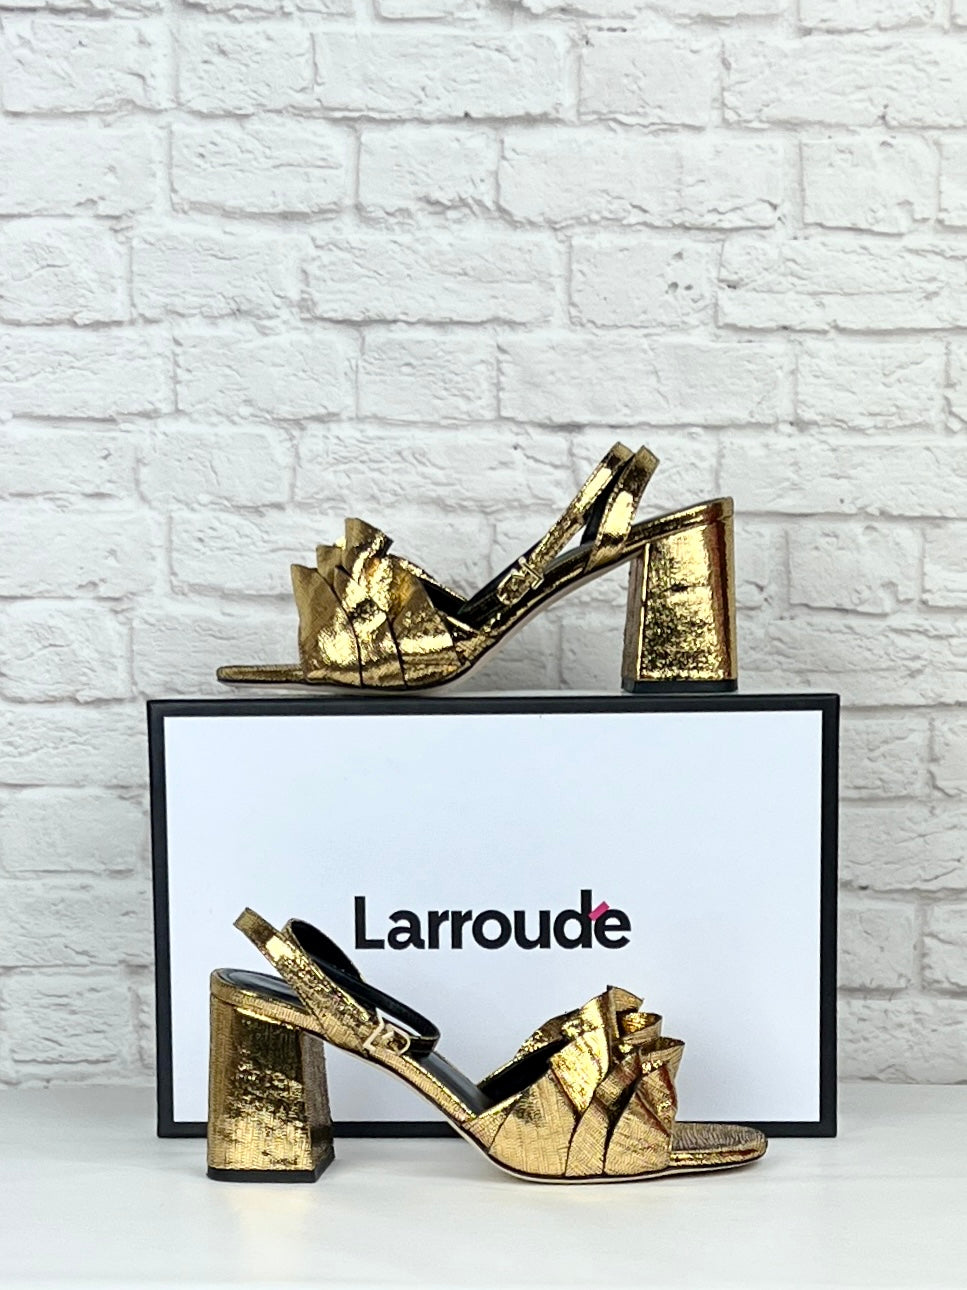 Larroude Selena Ruffle Sandal In Gold Cracked Metallic Leather, Size 8.5